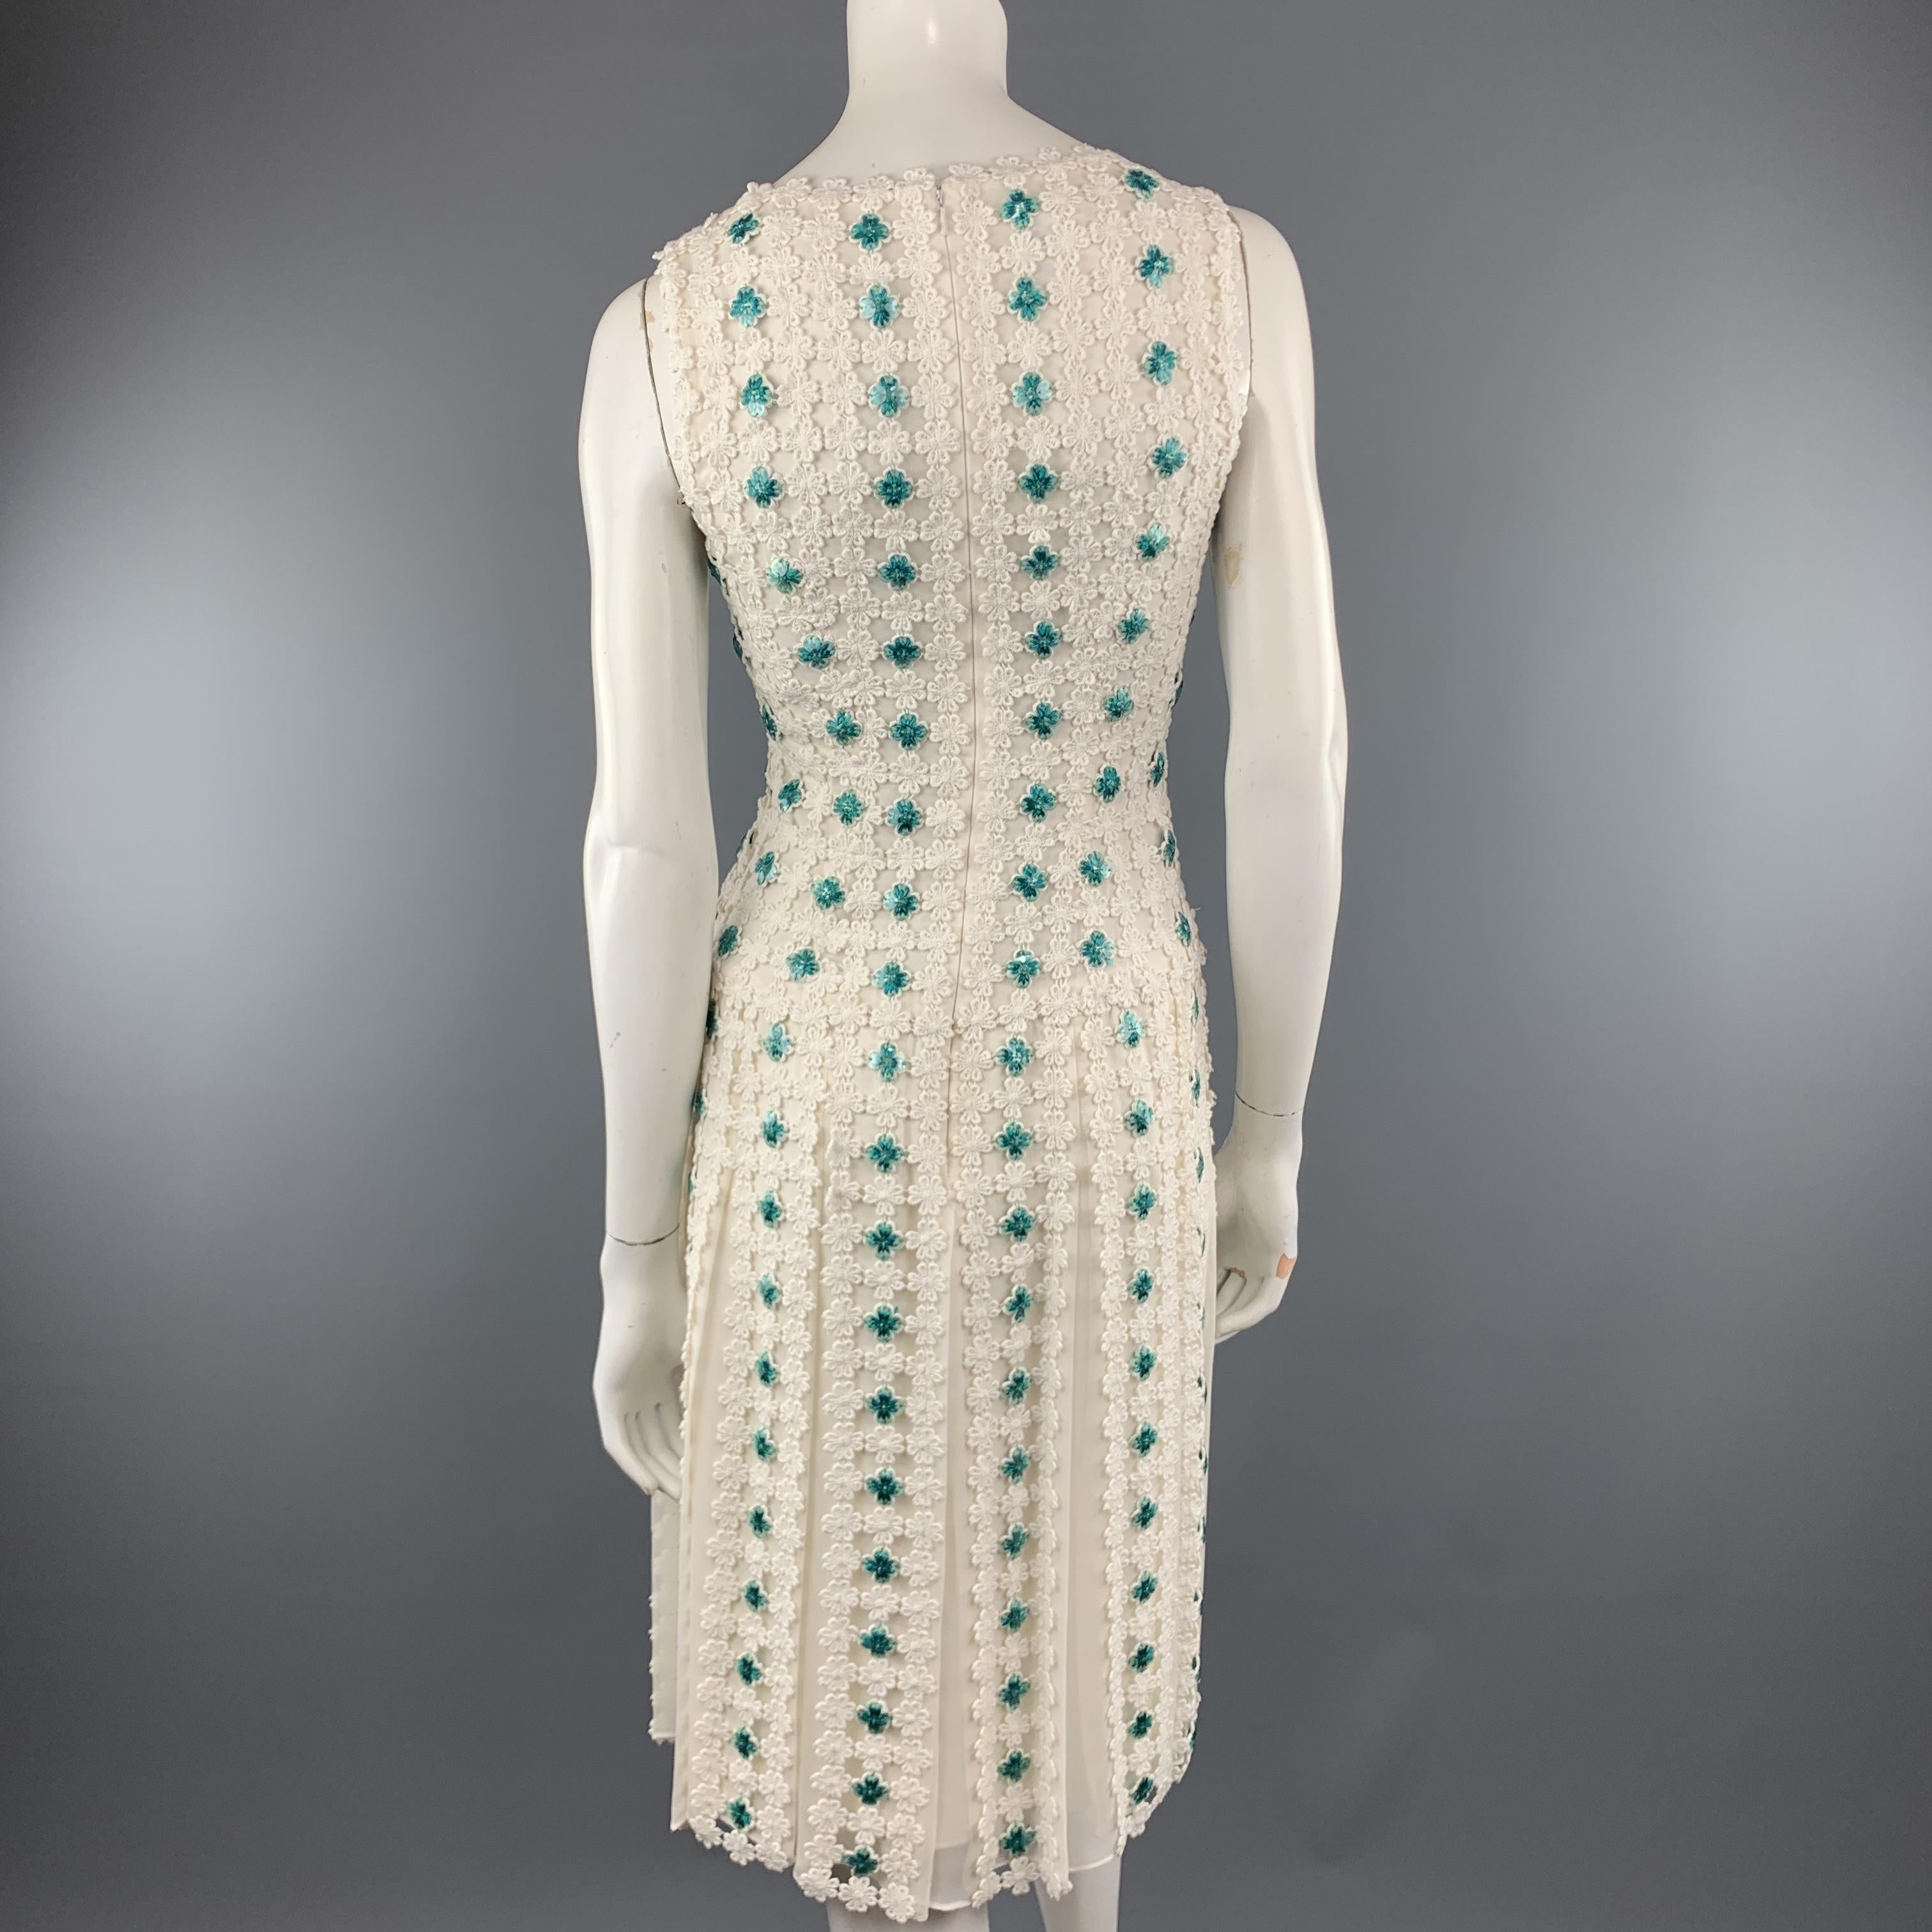 OSCAR DE LA RENTA Size 0 White Turquoise Sewuin Lace Sleeveless Cocktail Dress 1